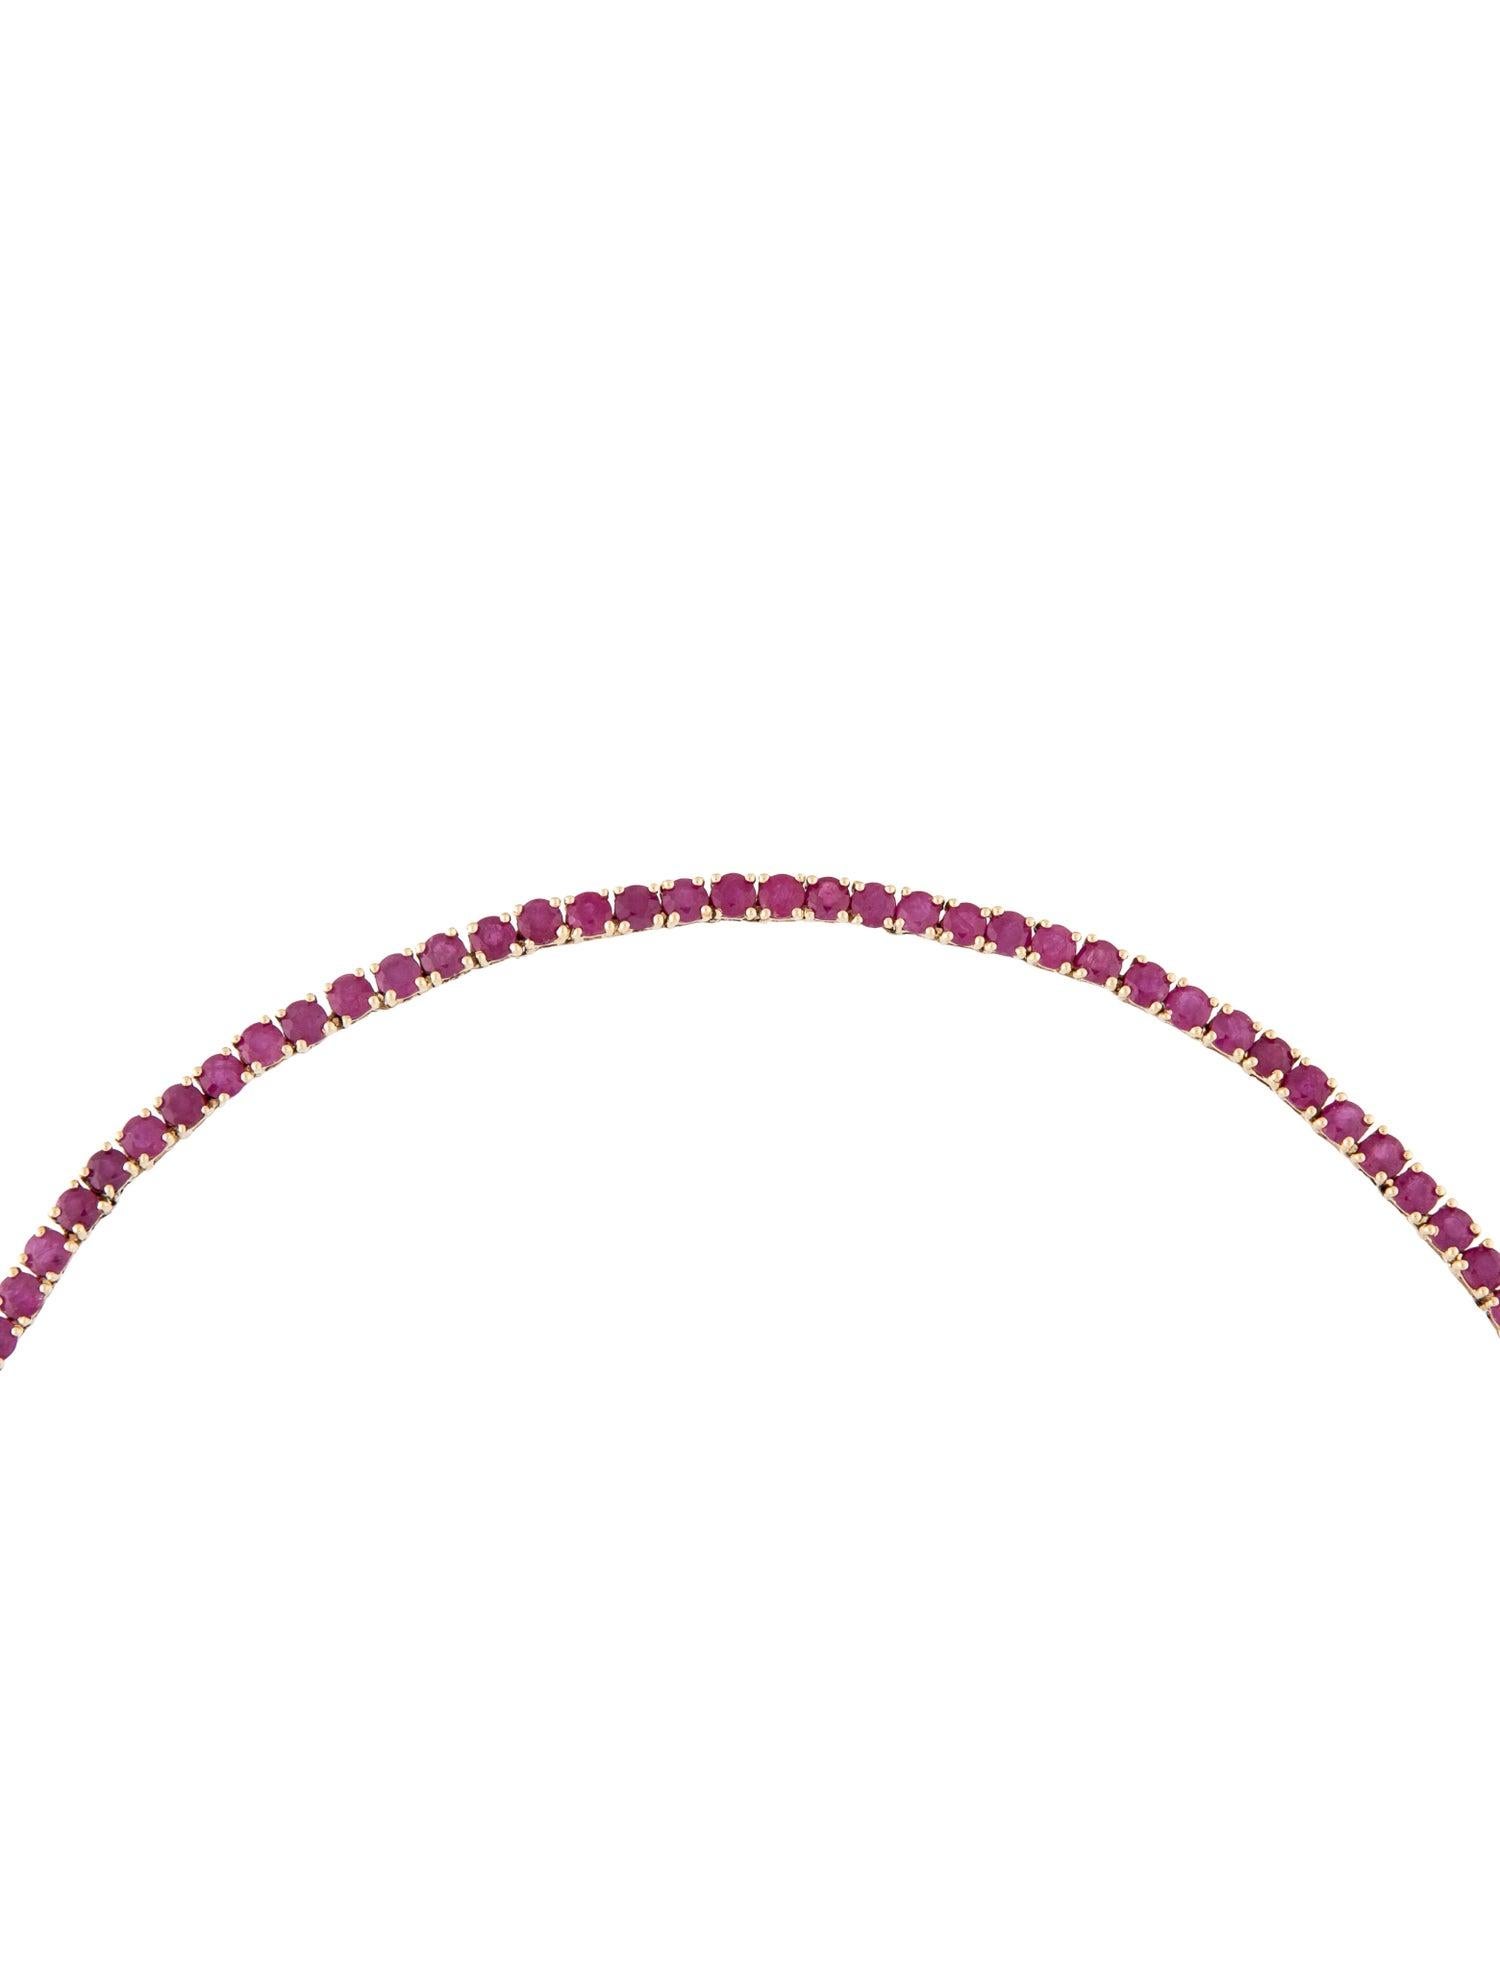 Brilliant Cut Luxury 14K 10.17ctw Ruby Collar Necklace - Exquisite Gemstone Statement Piece For Sale